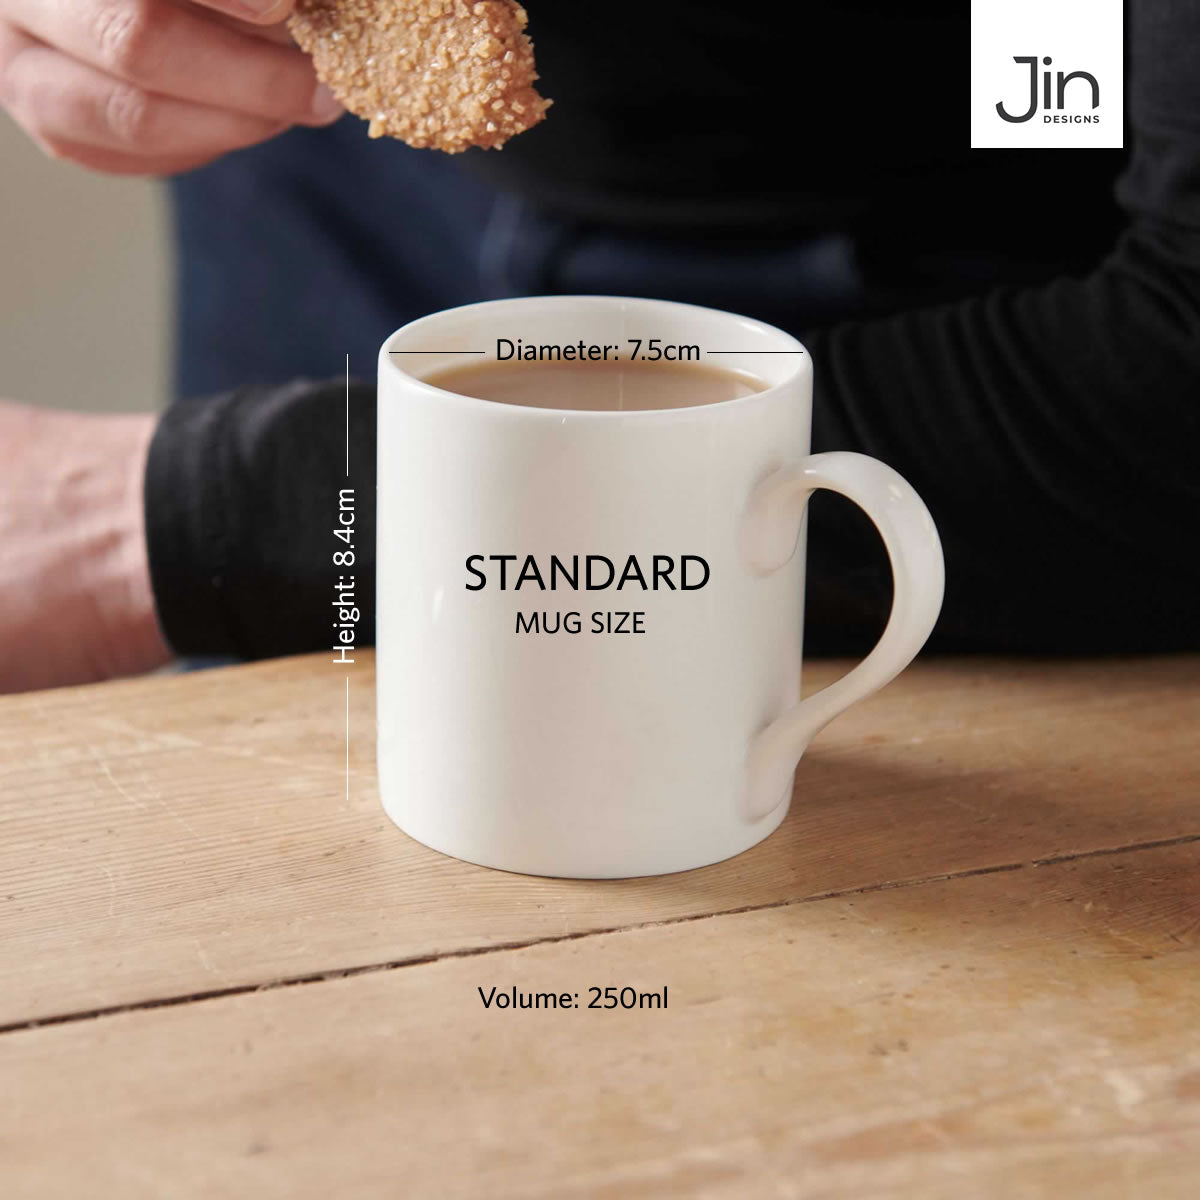 Jin Designs Mug Size Standard